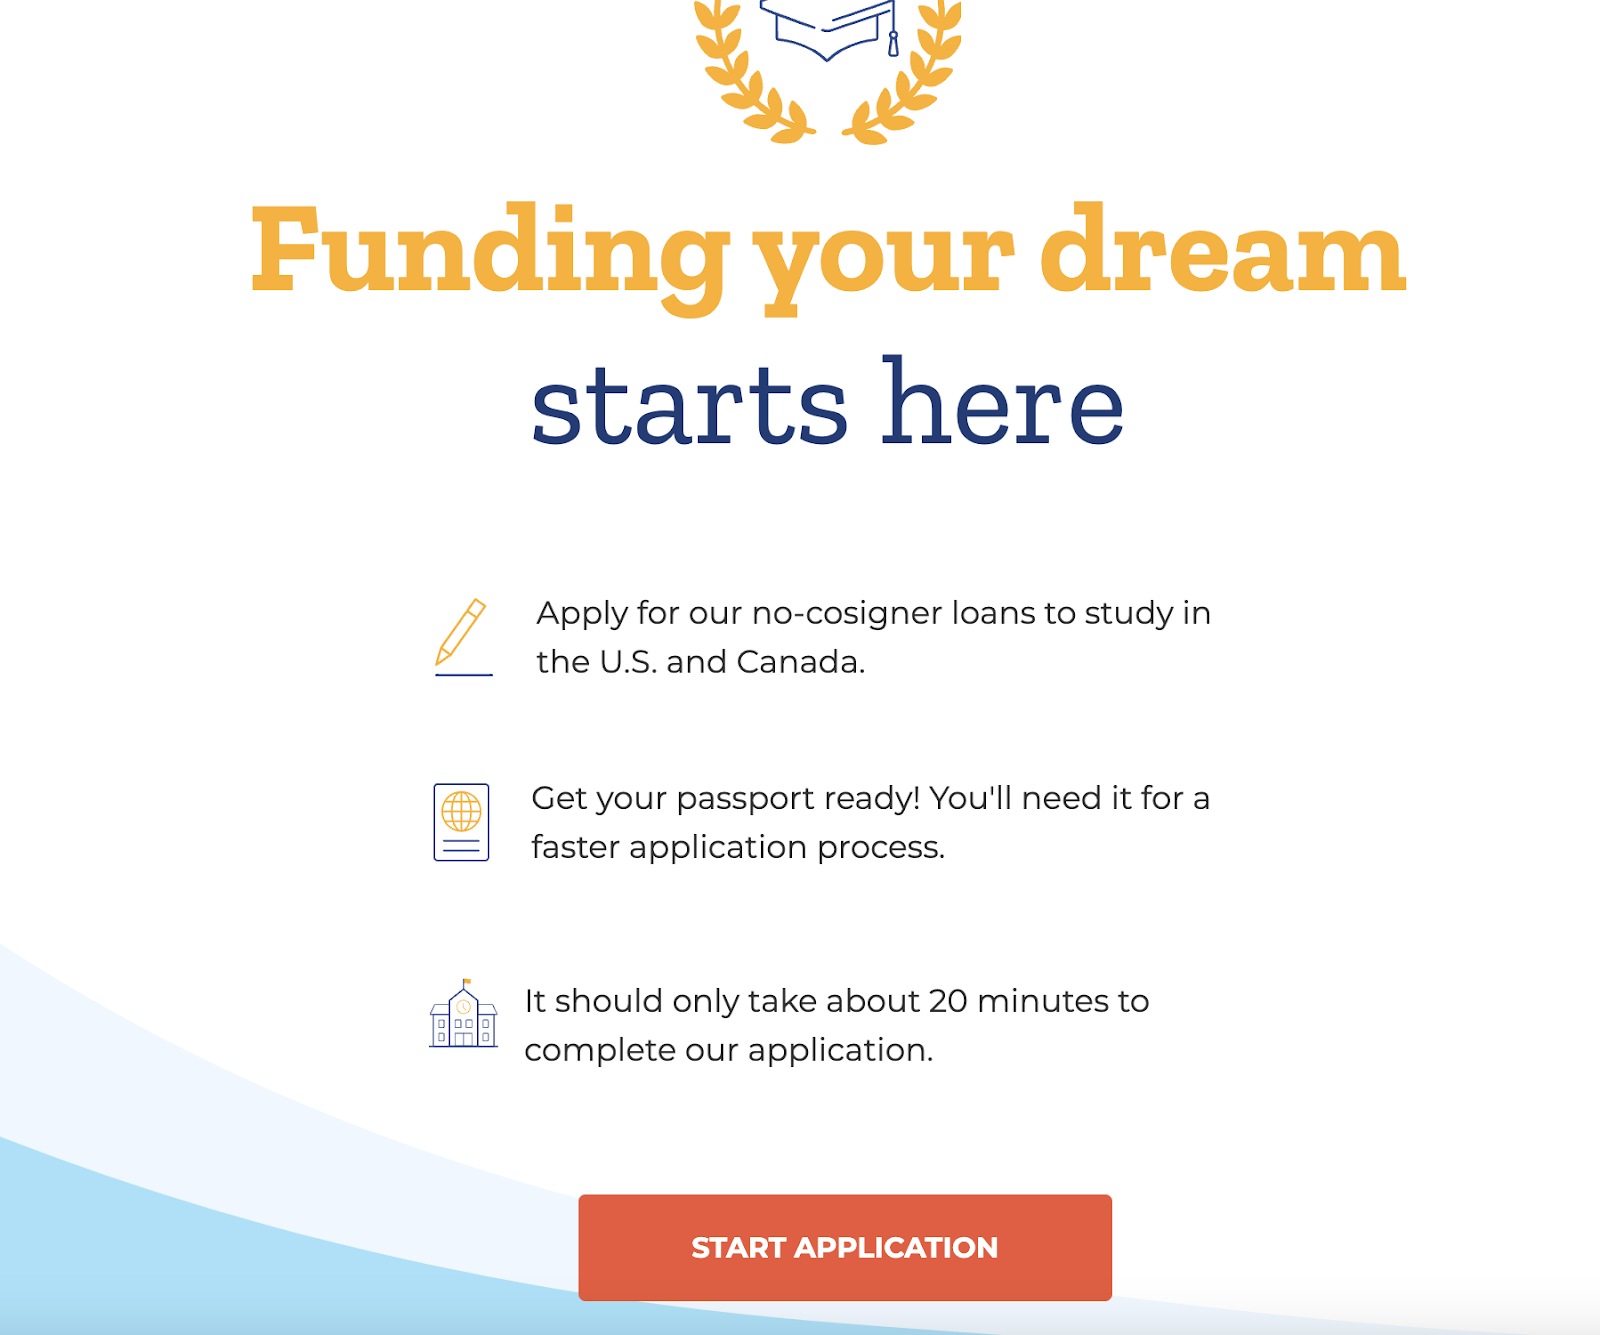 MPOWER student loan application